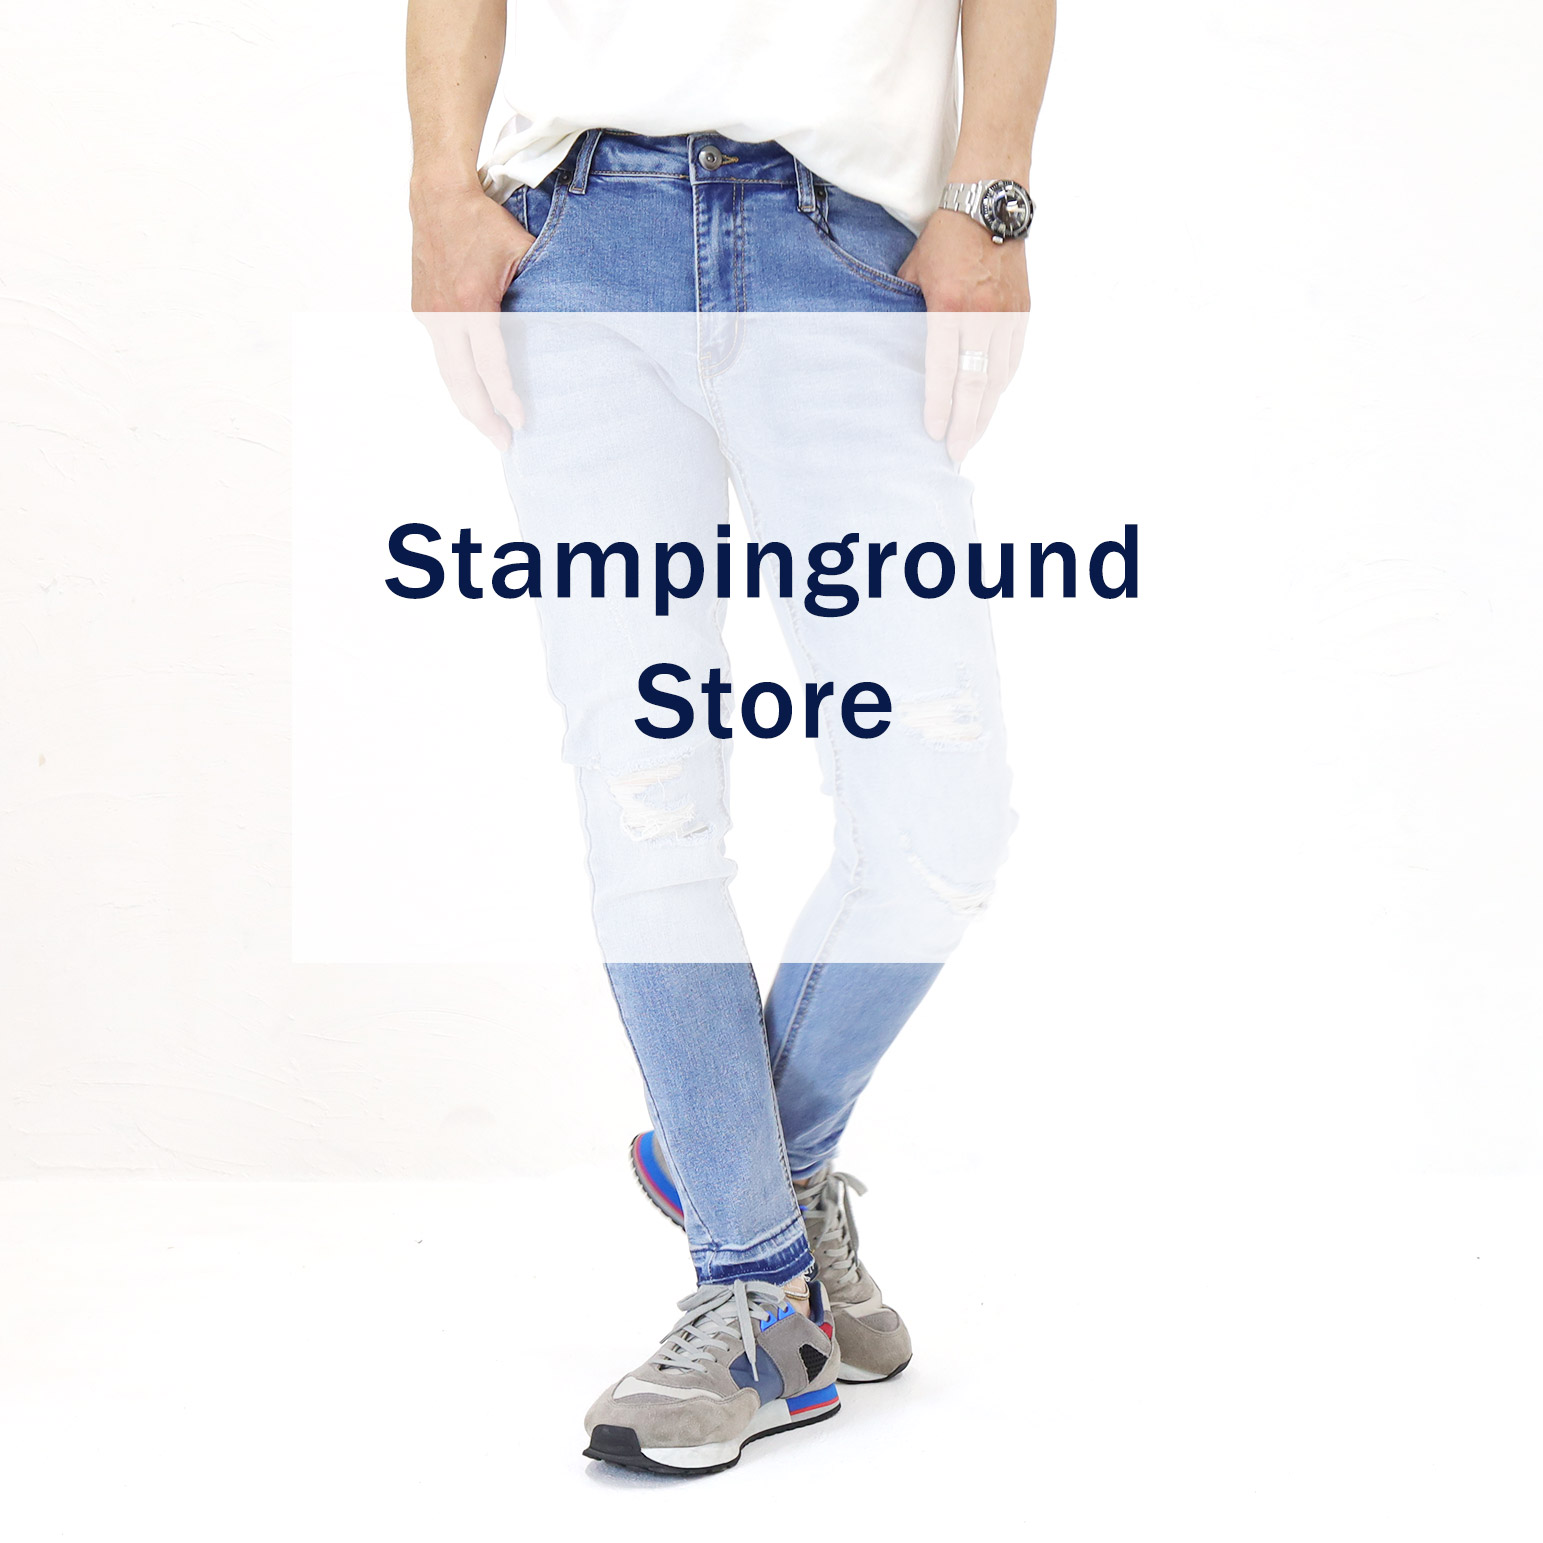 StampingroundStore_スーパーデリバリー